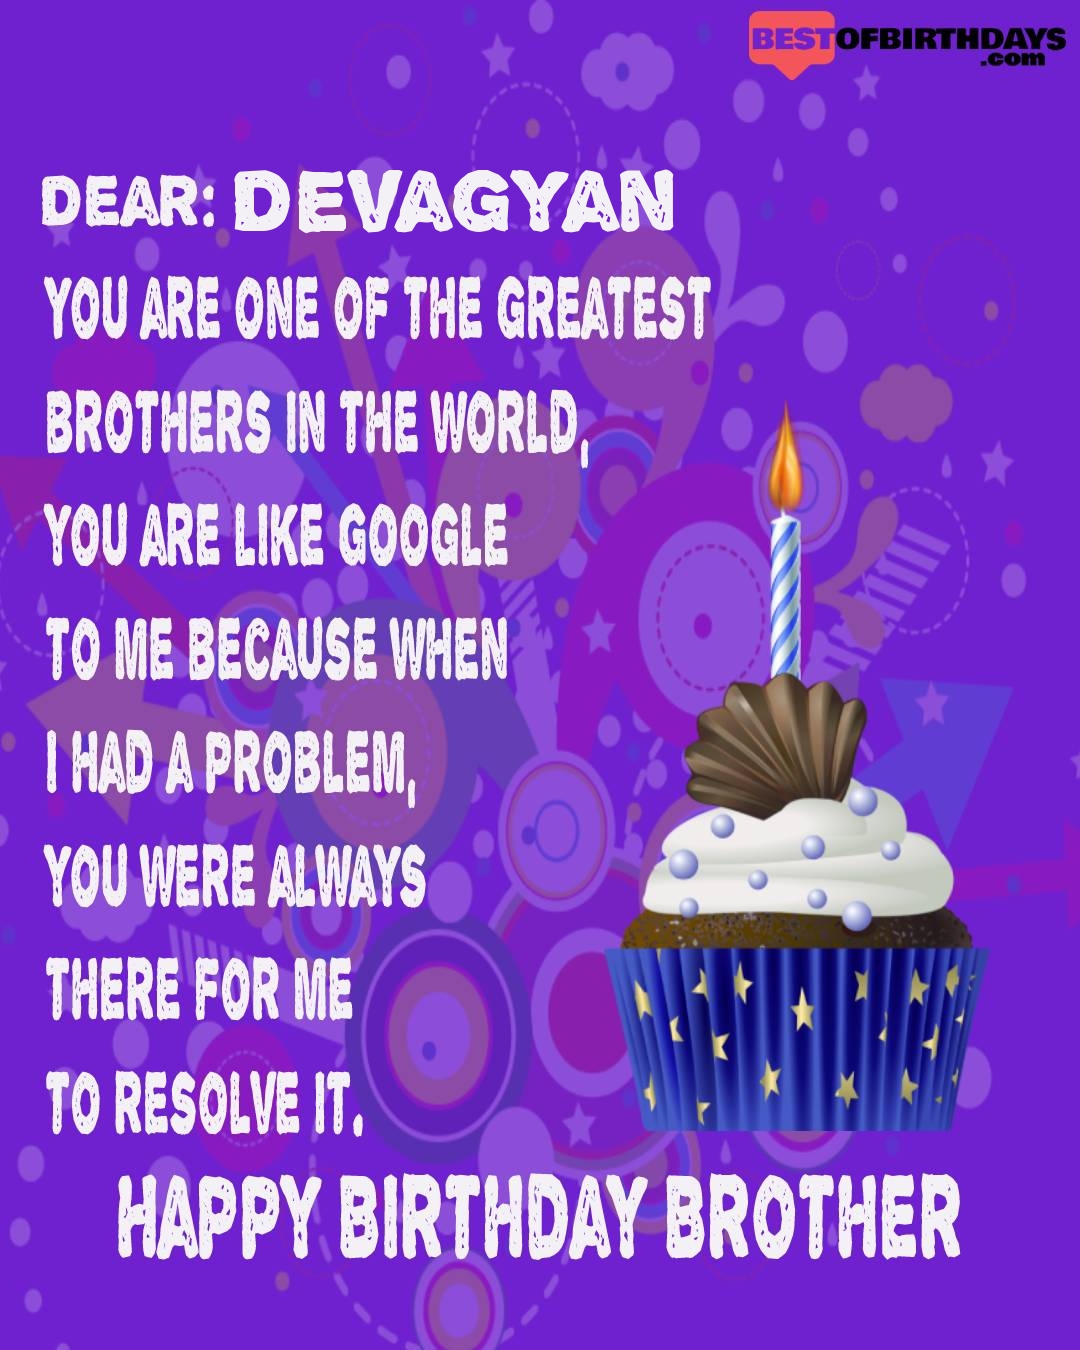 Happy birthday devagyan bhai brother bro